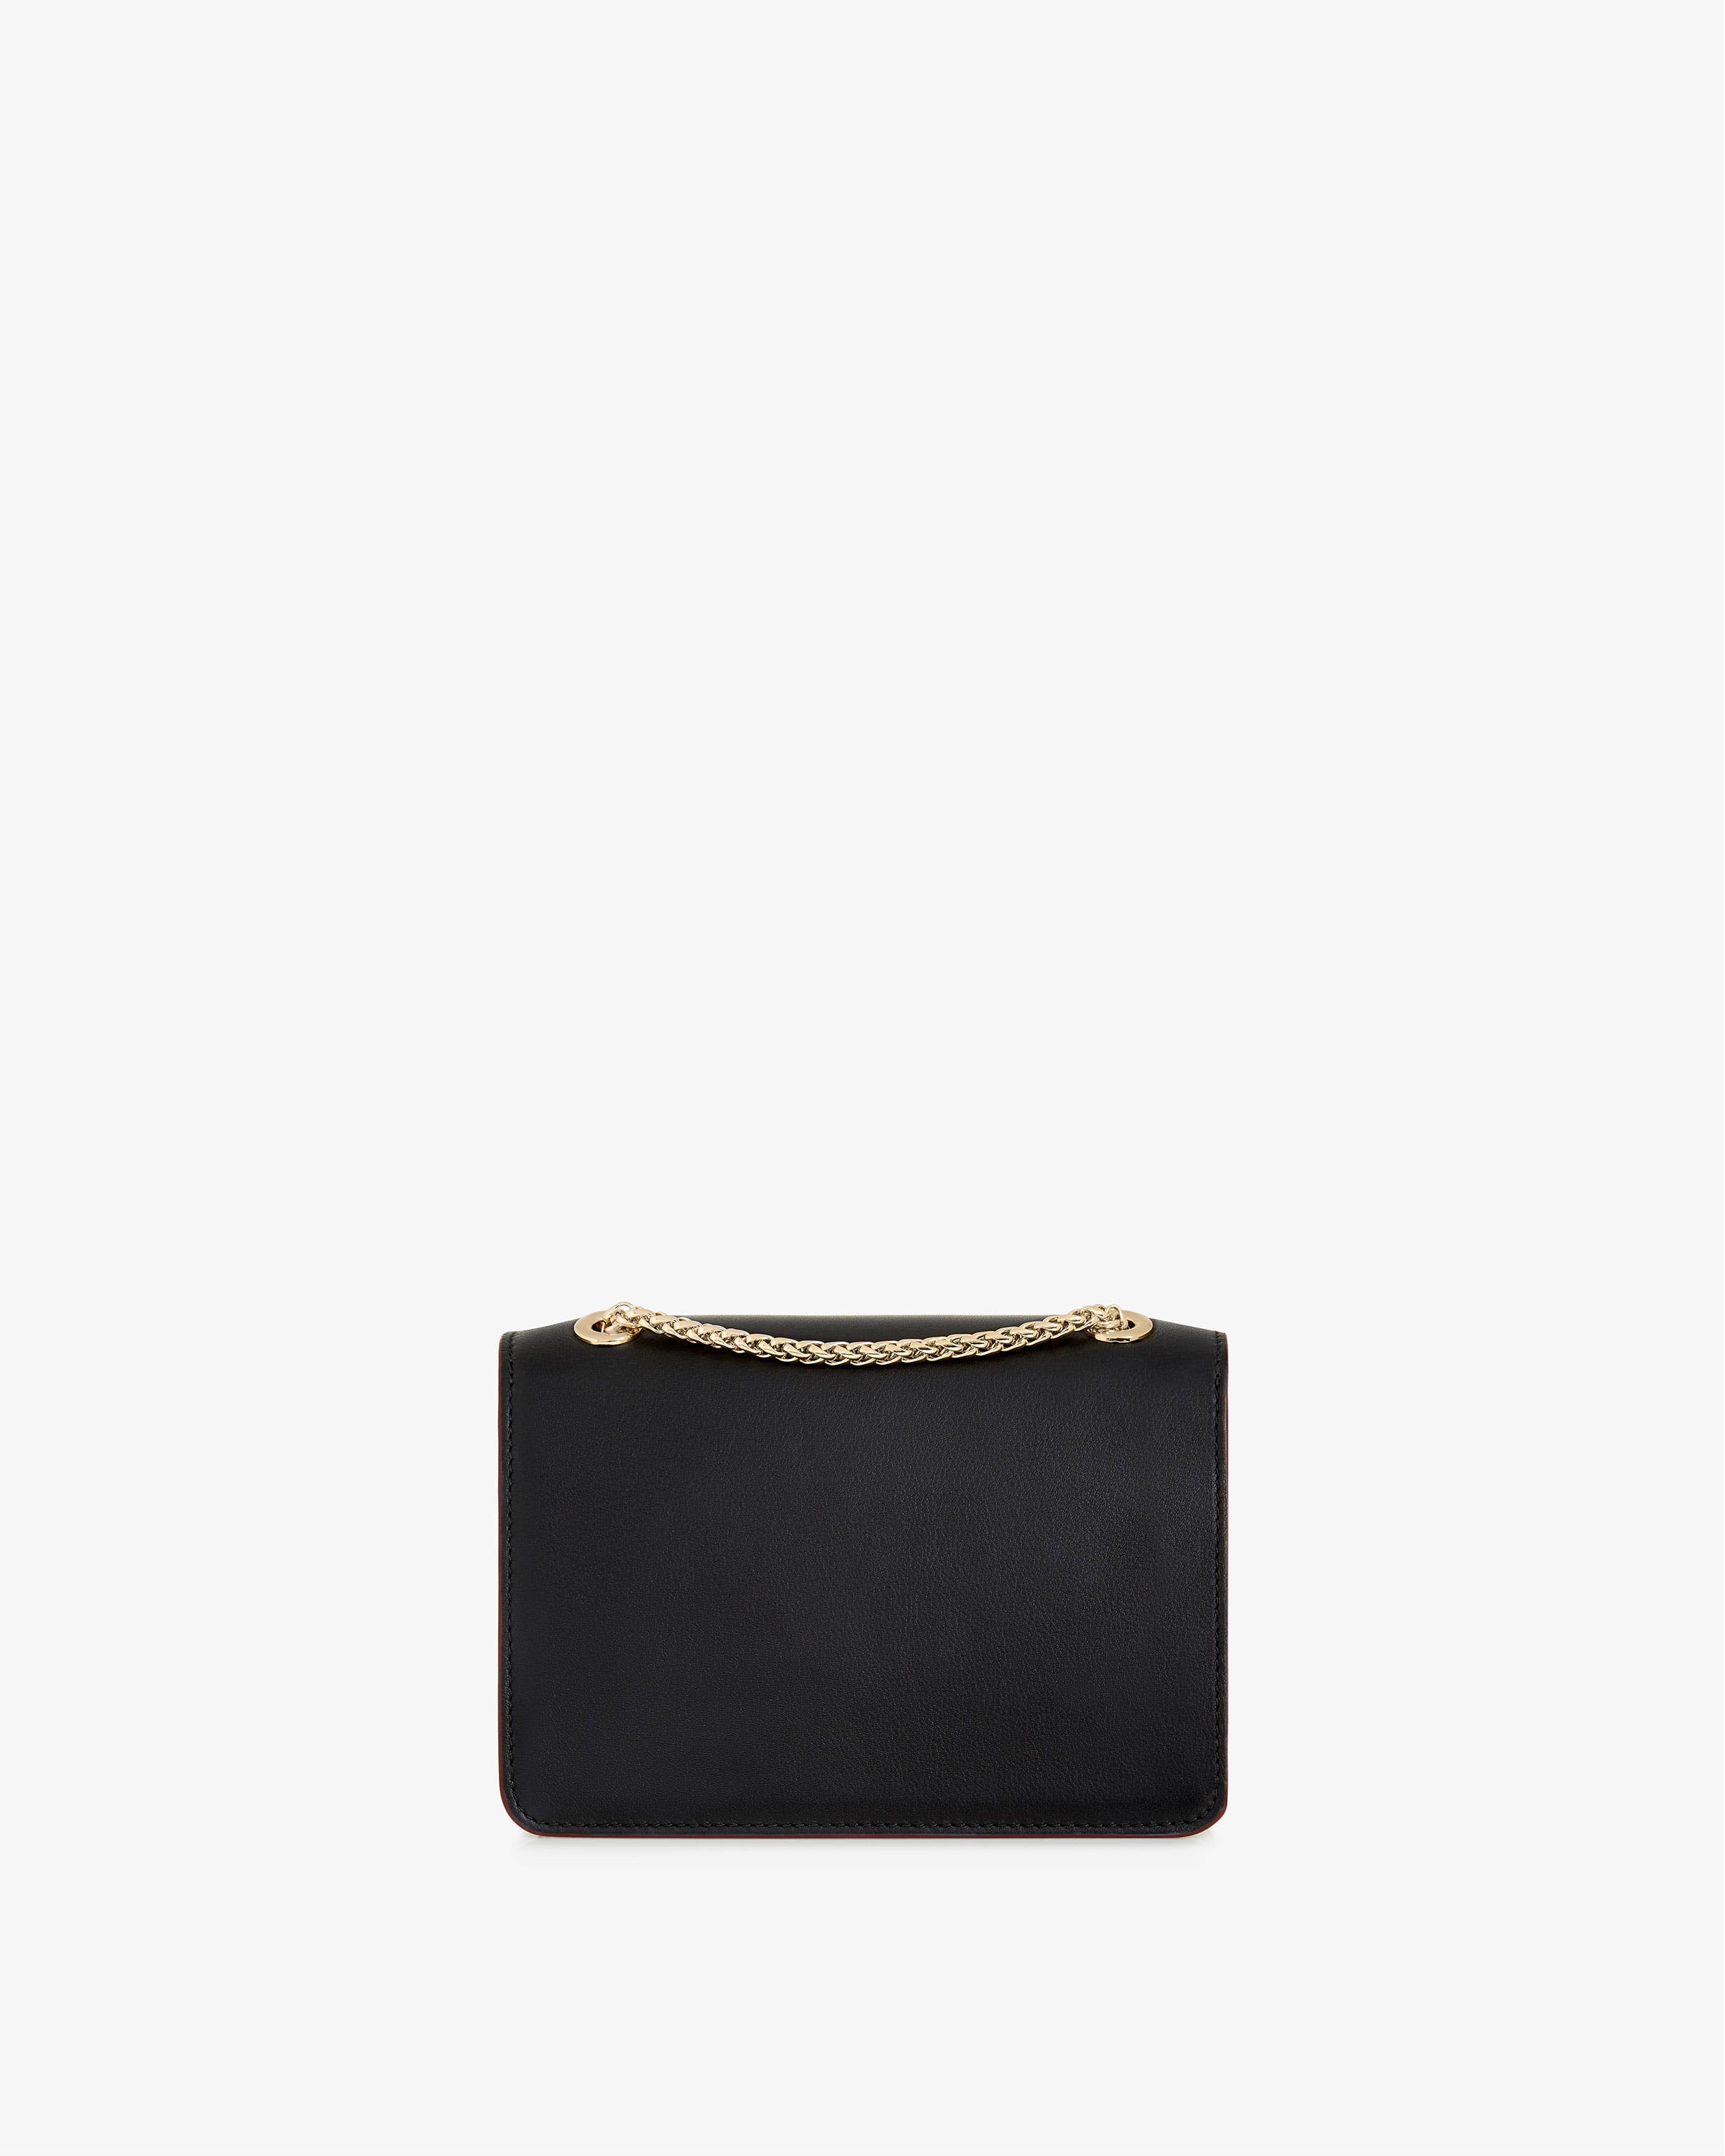 Strathberry - East/West Mini - Crossbody Leather Mini Handbag - Black ...